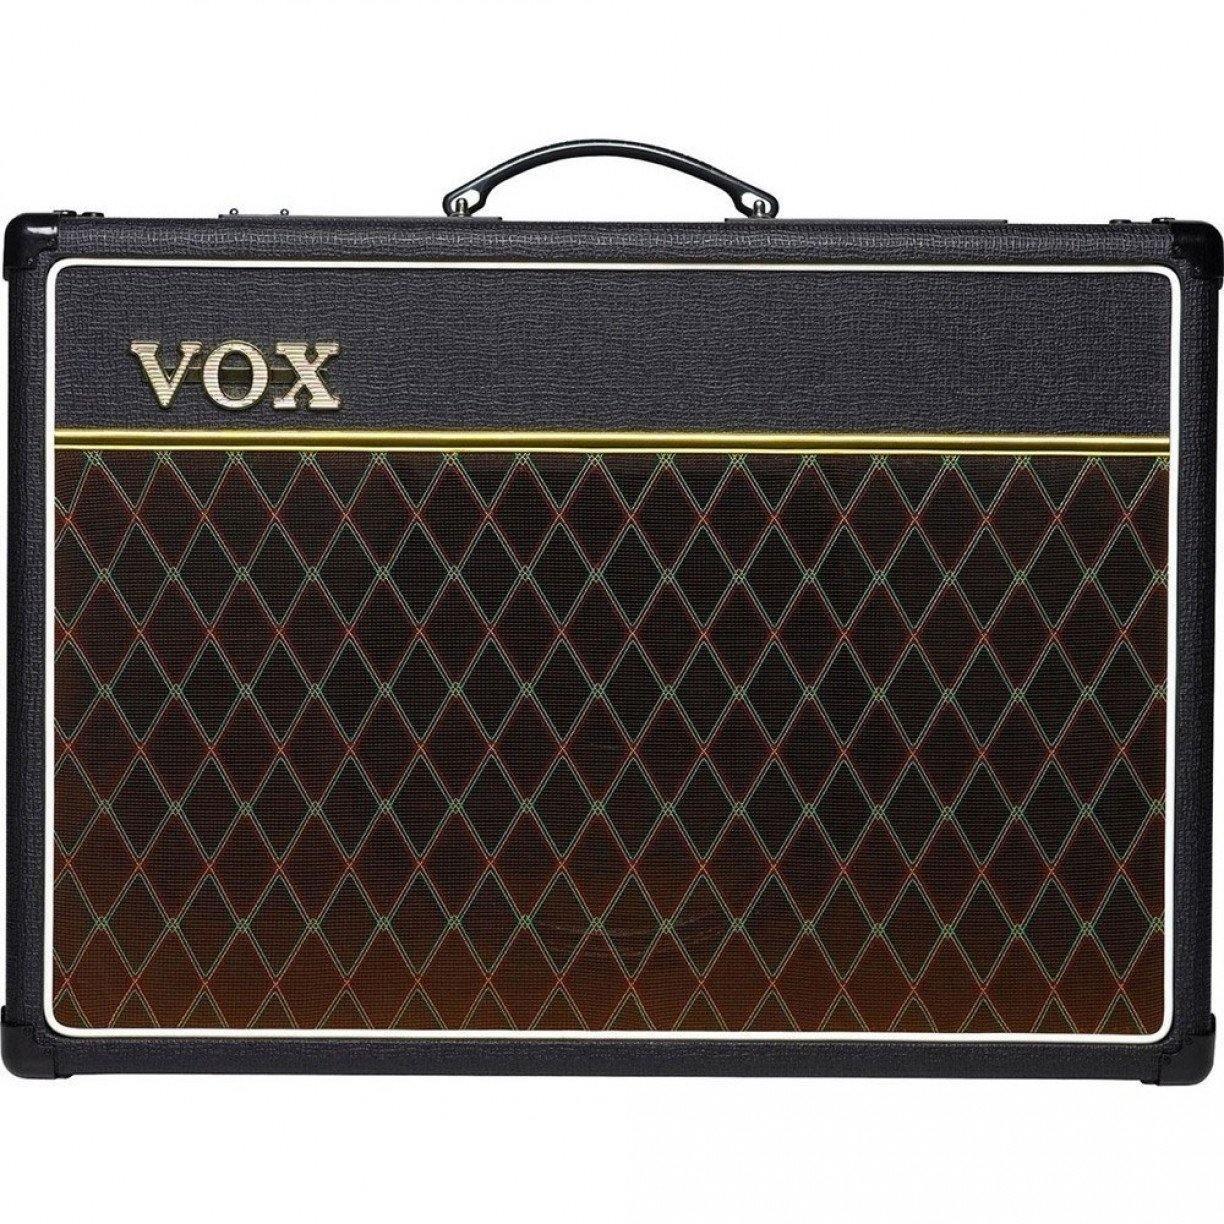 VOX AC15C1 15 Watt Guitar Amp Combo - Guitars - Amplifiers by VOX at Muso's Stuff